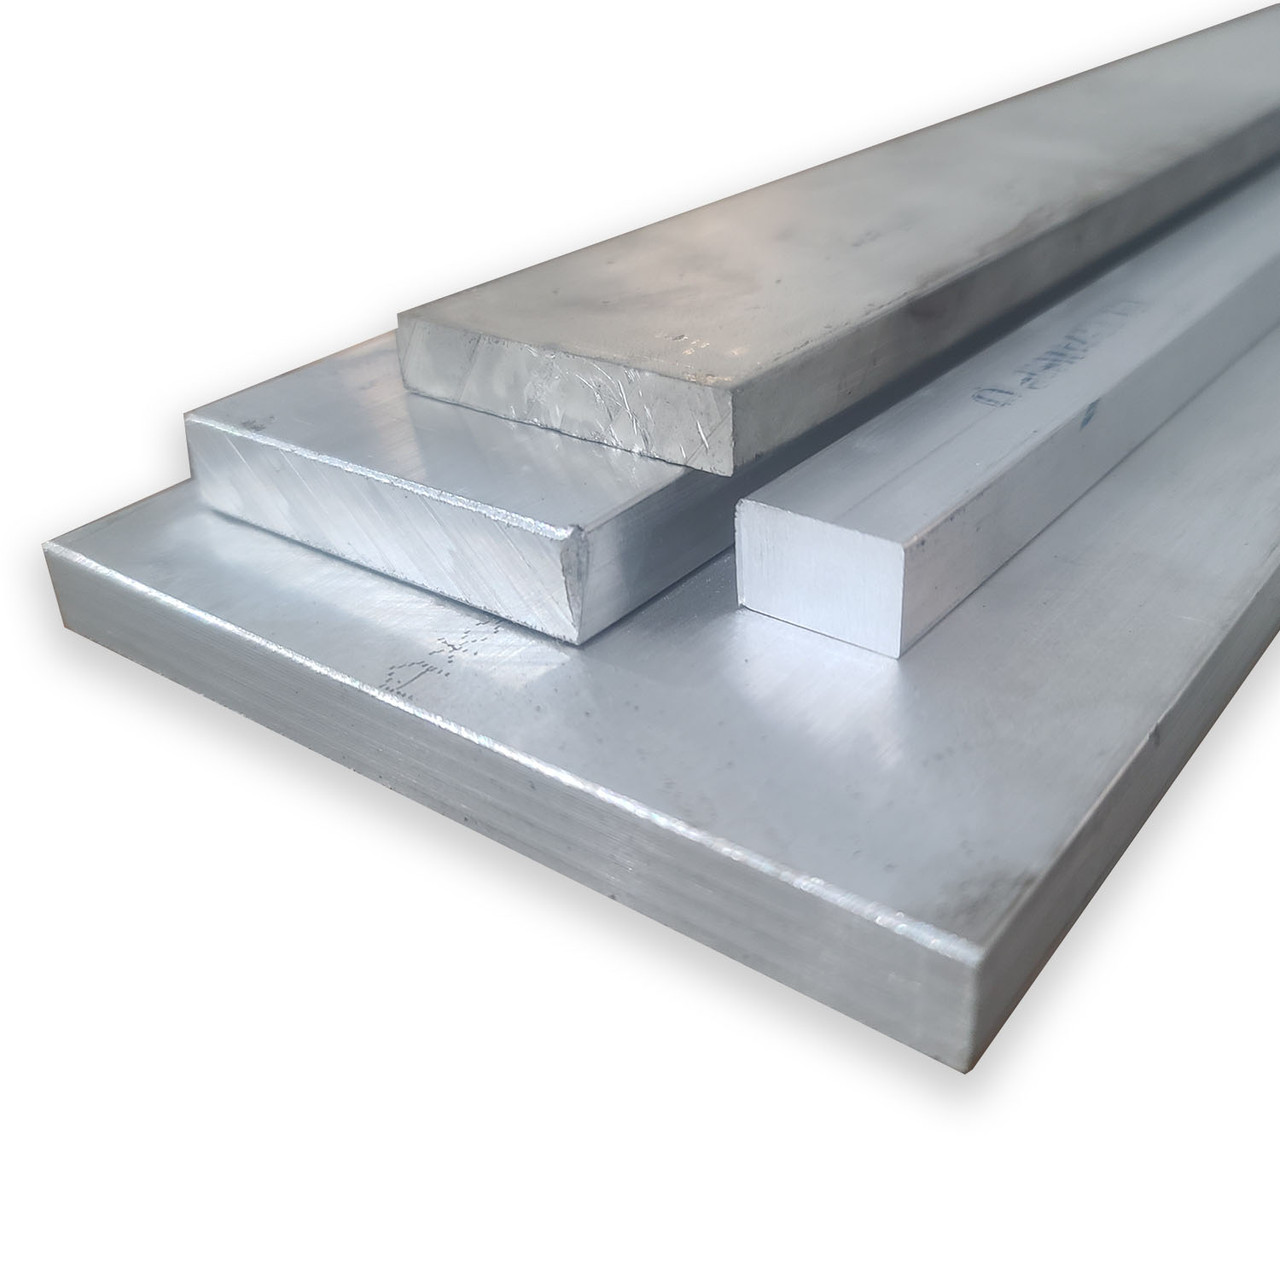 0.750" x 3" x 48", 6061-T6511 Aluminum Flat Bar